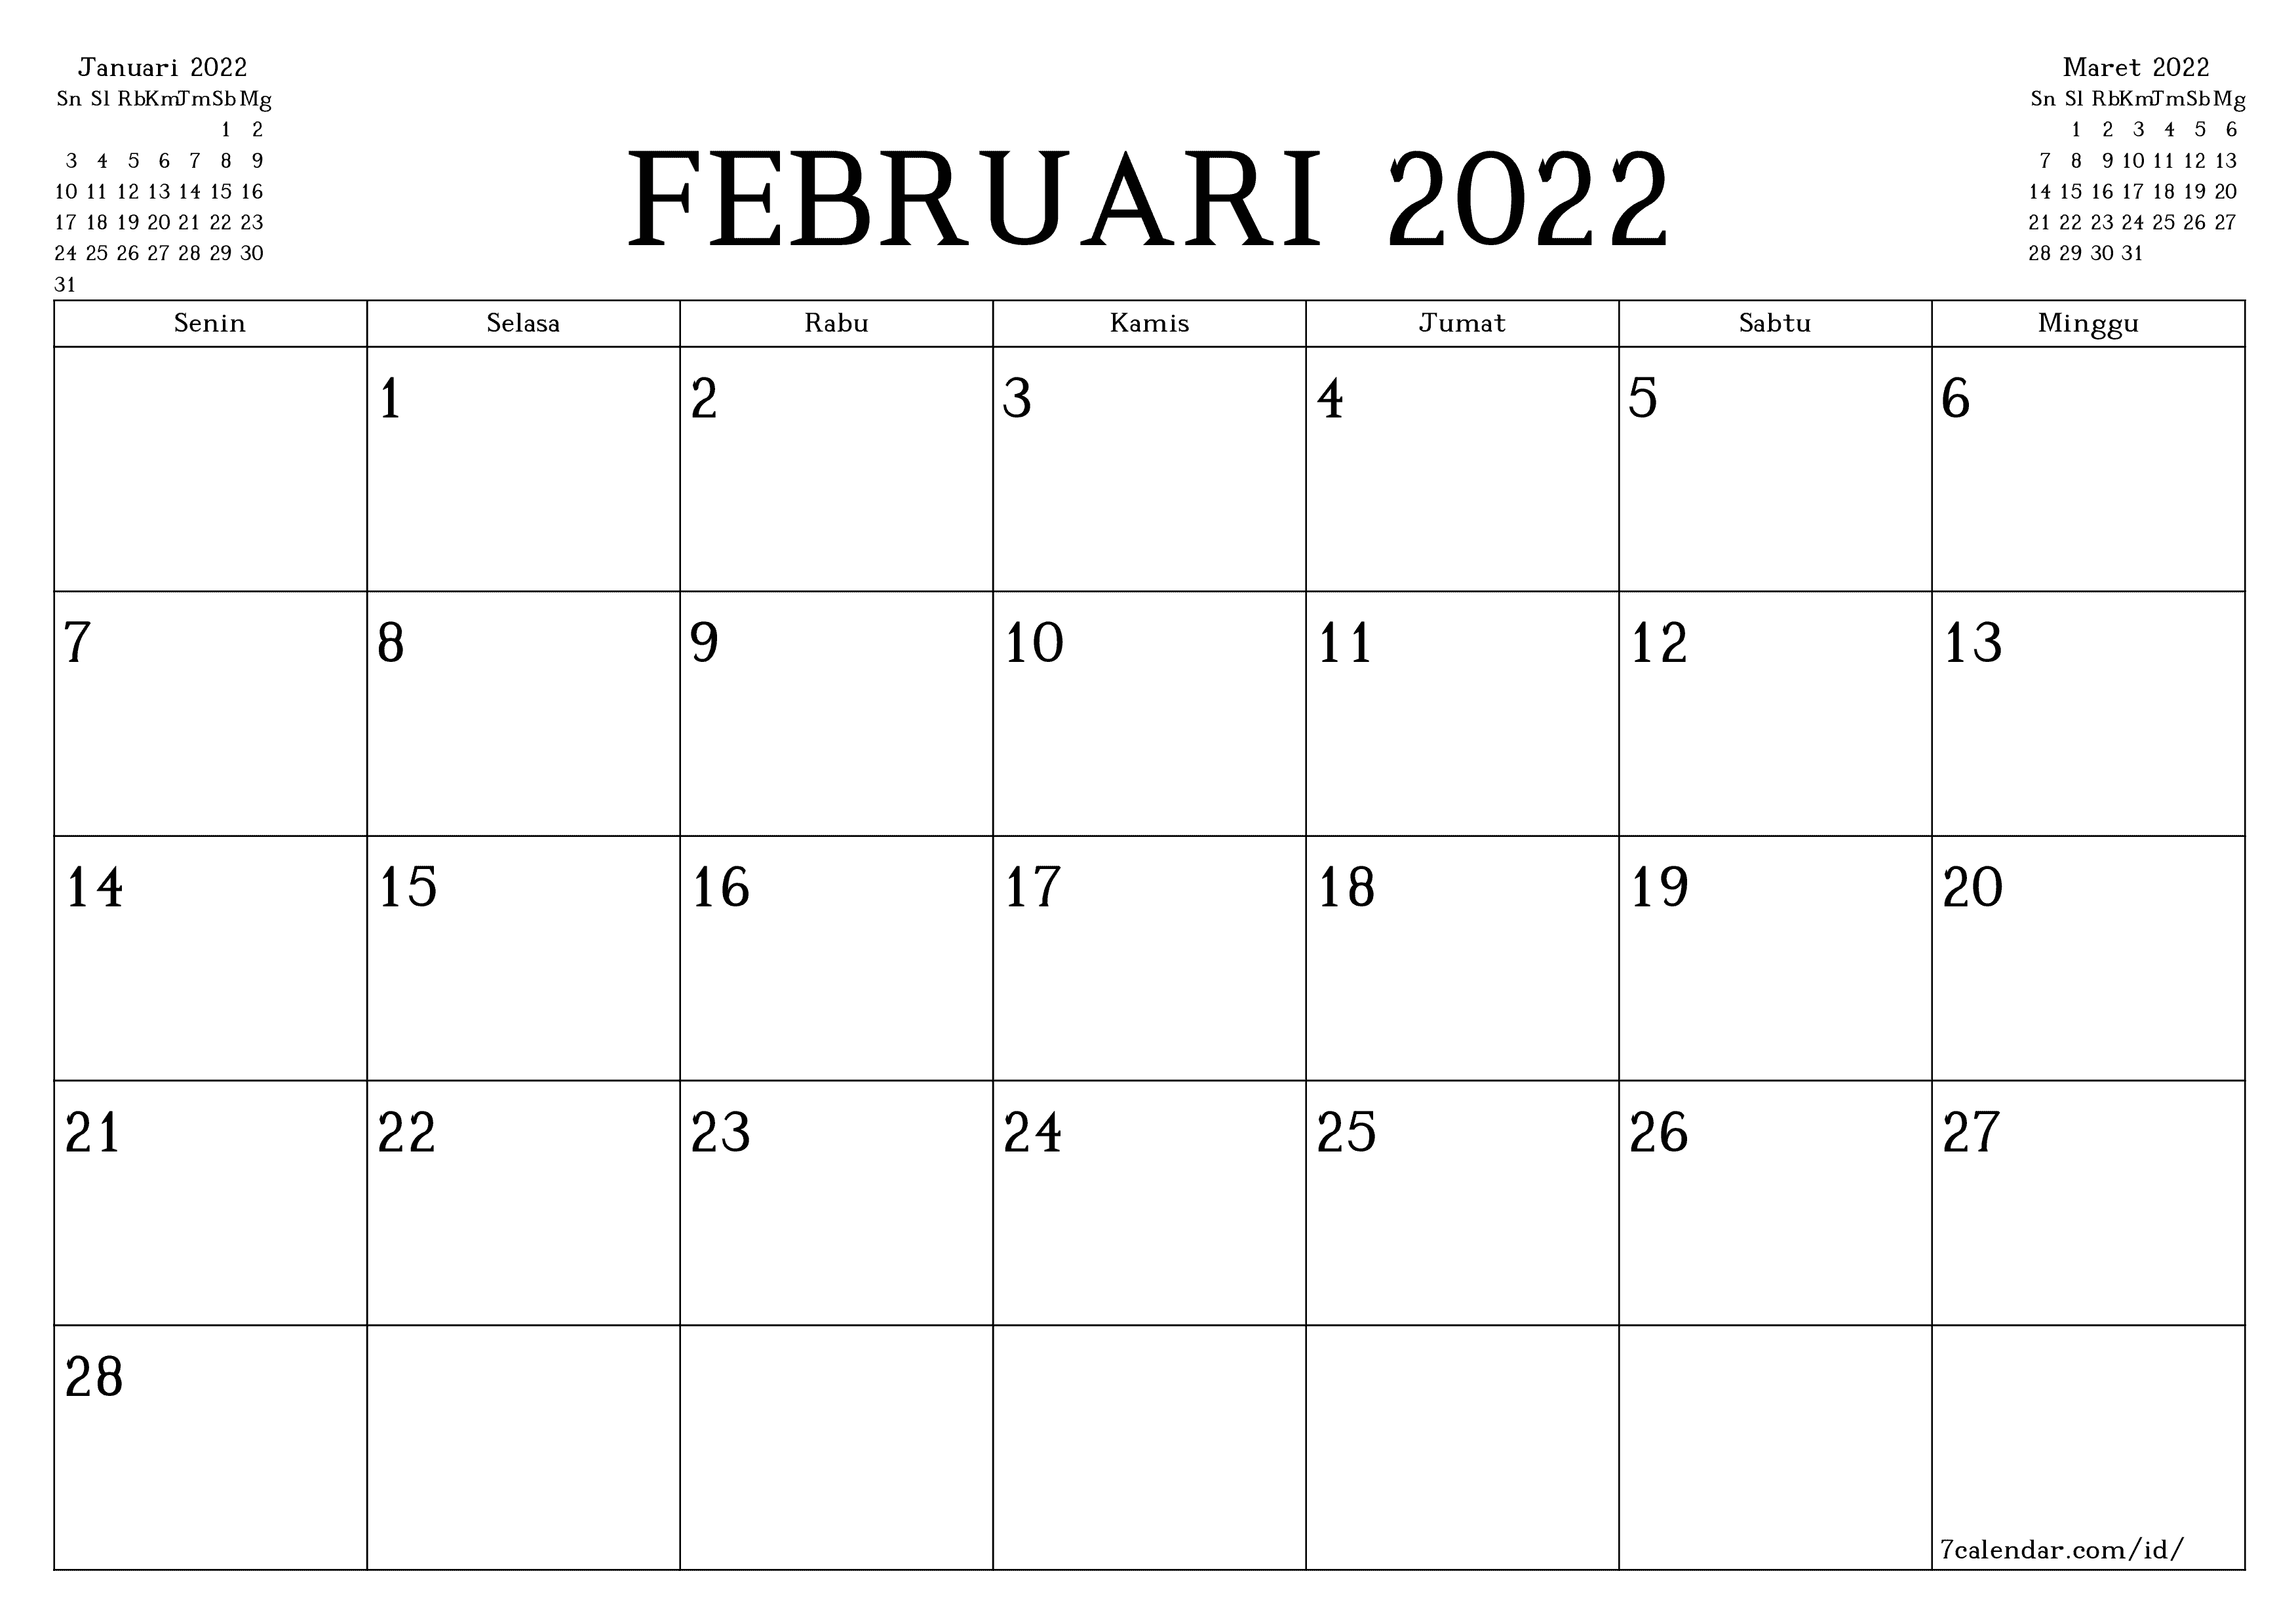 Kosongkan agenda bulanan untuk bulan Februari 2022 dengan catatan, simpan dan cetak ke PDF PNG Indonesian - 7calendar.com